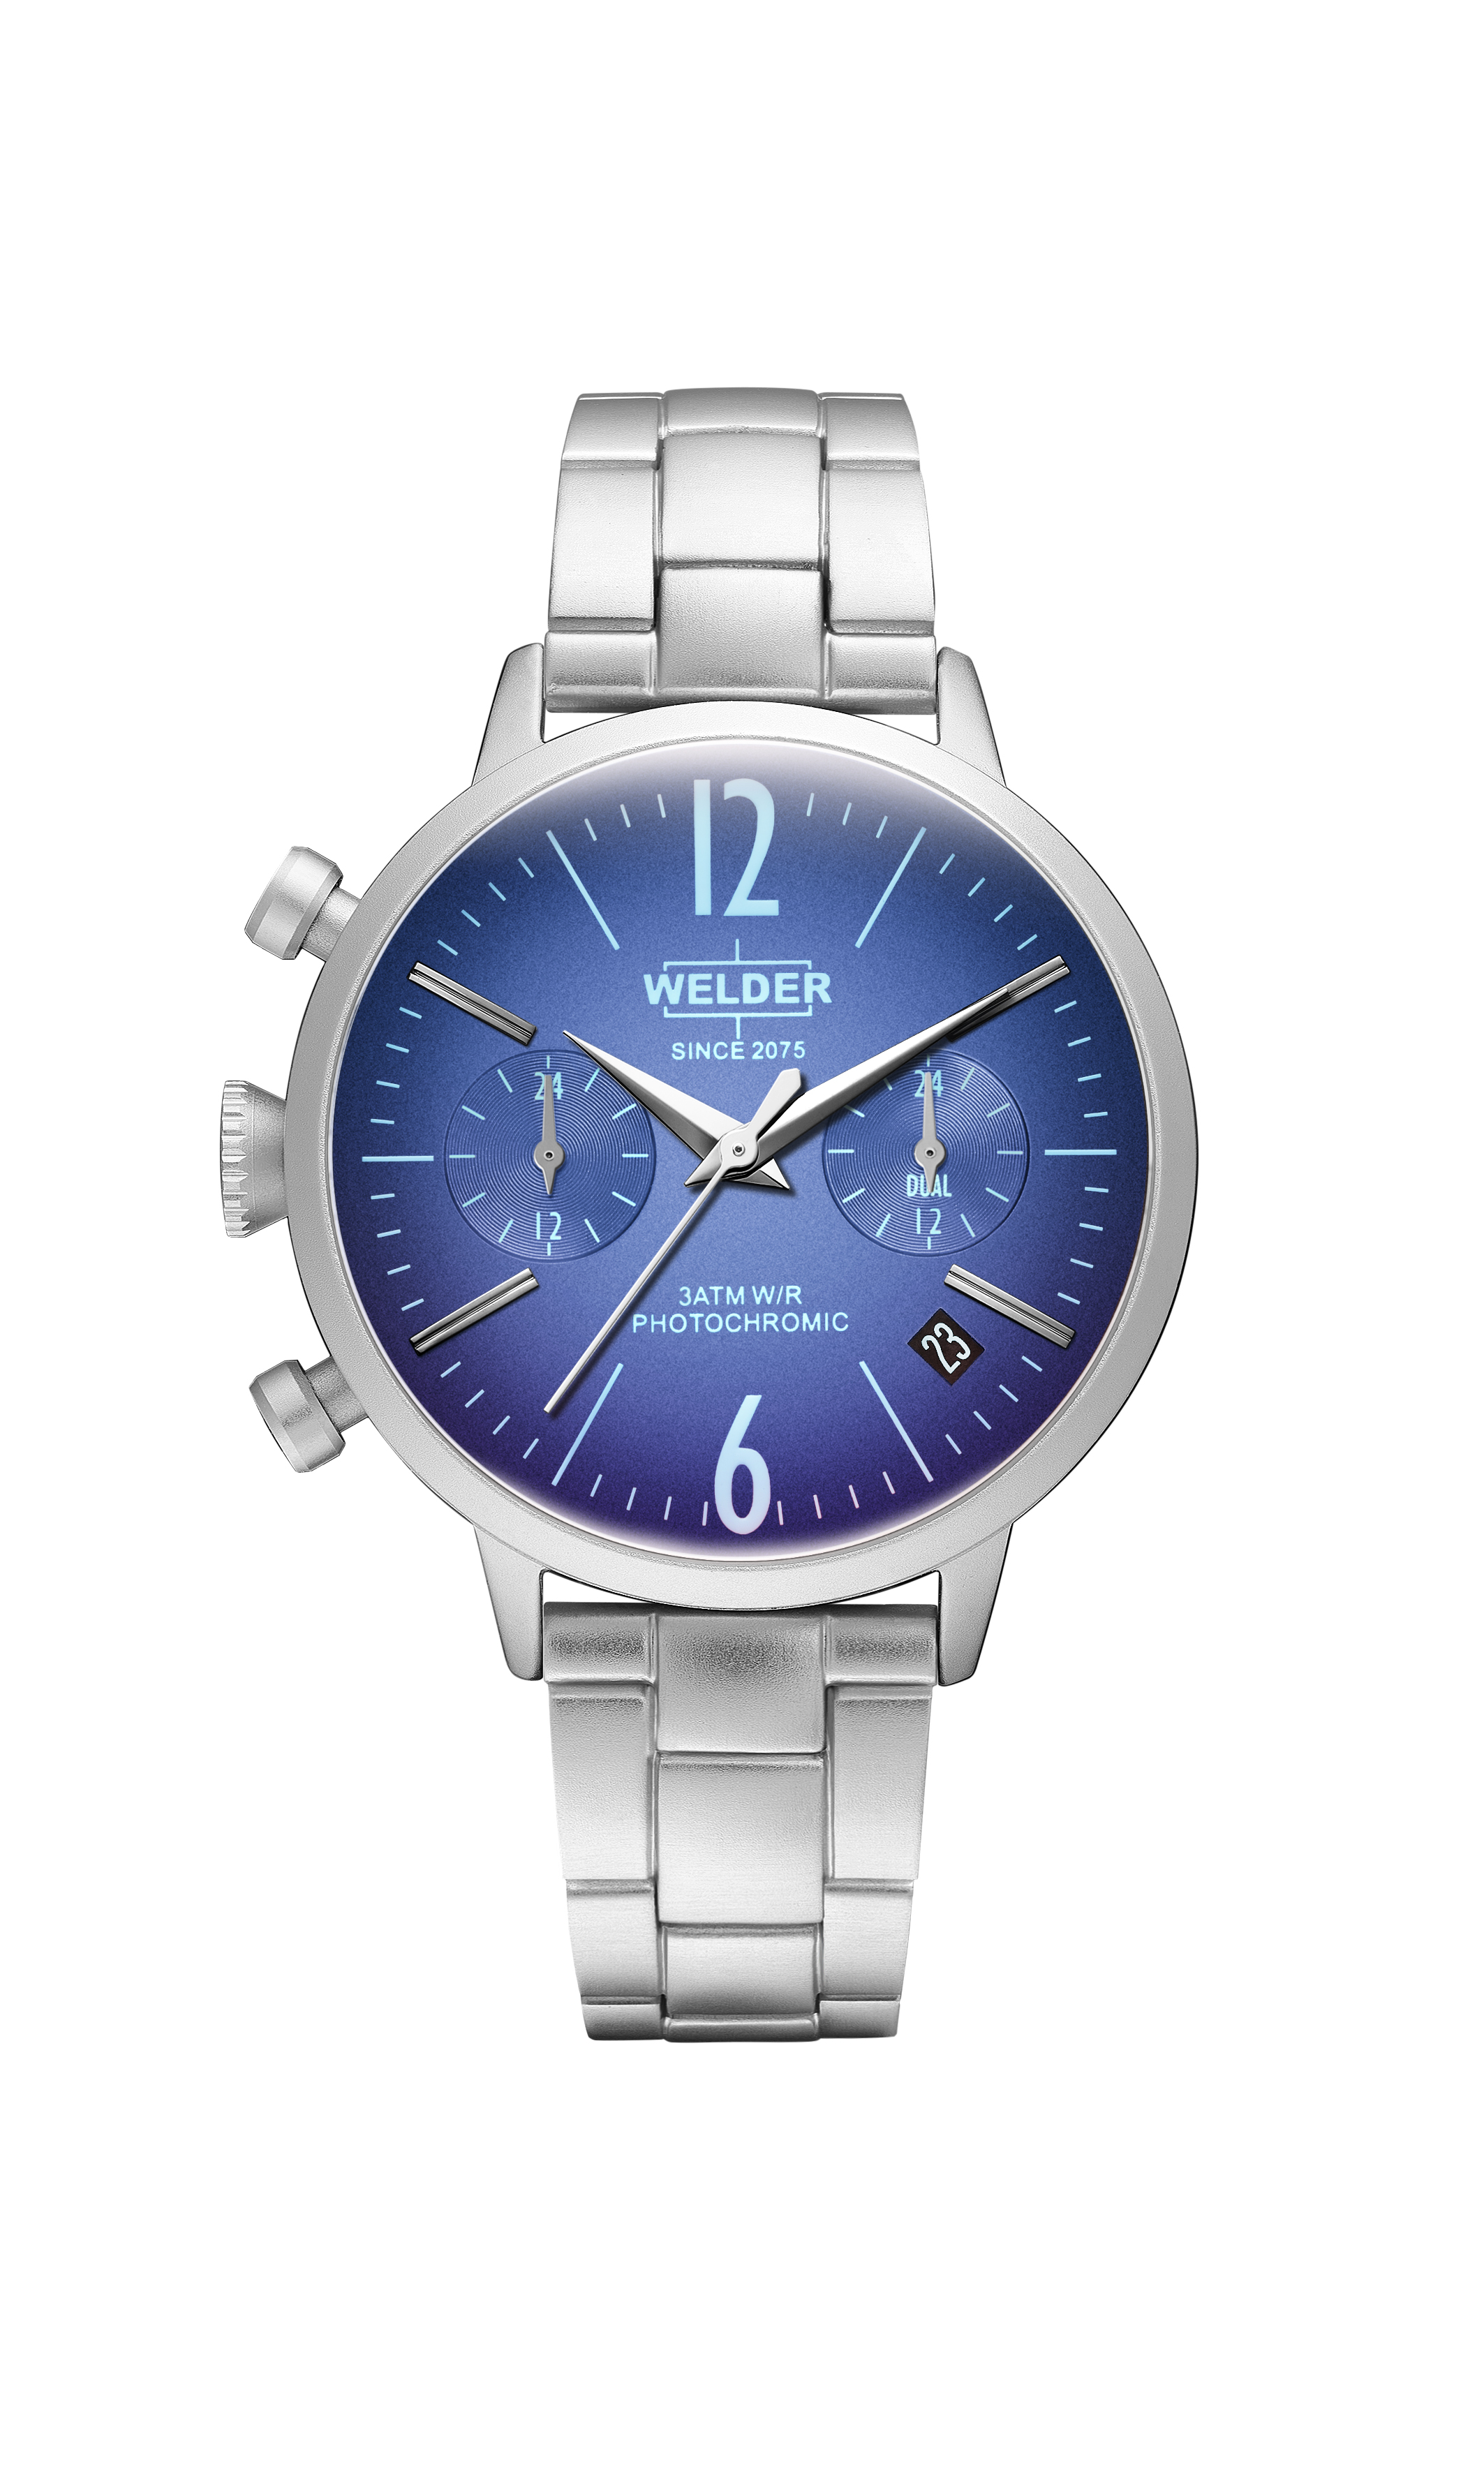 Унисекс часы Welder Welder WWRA122